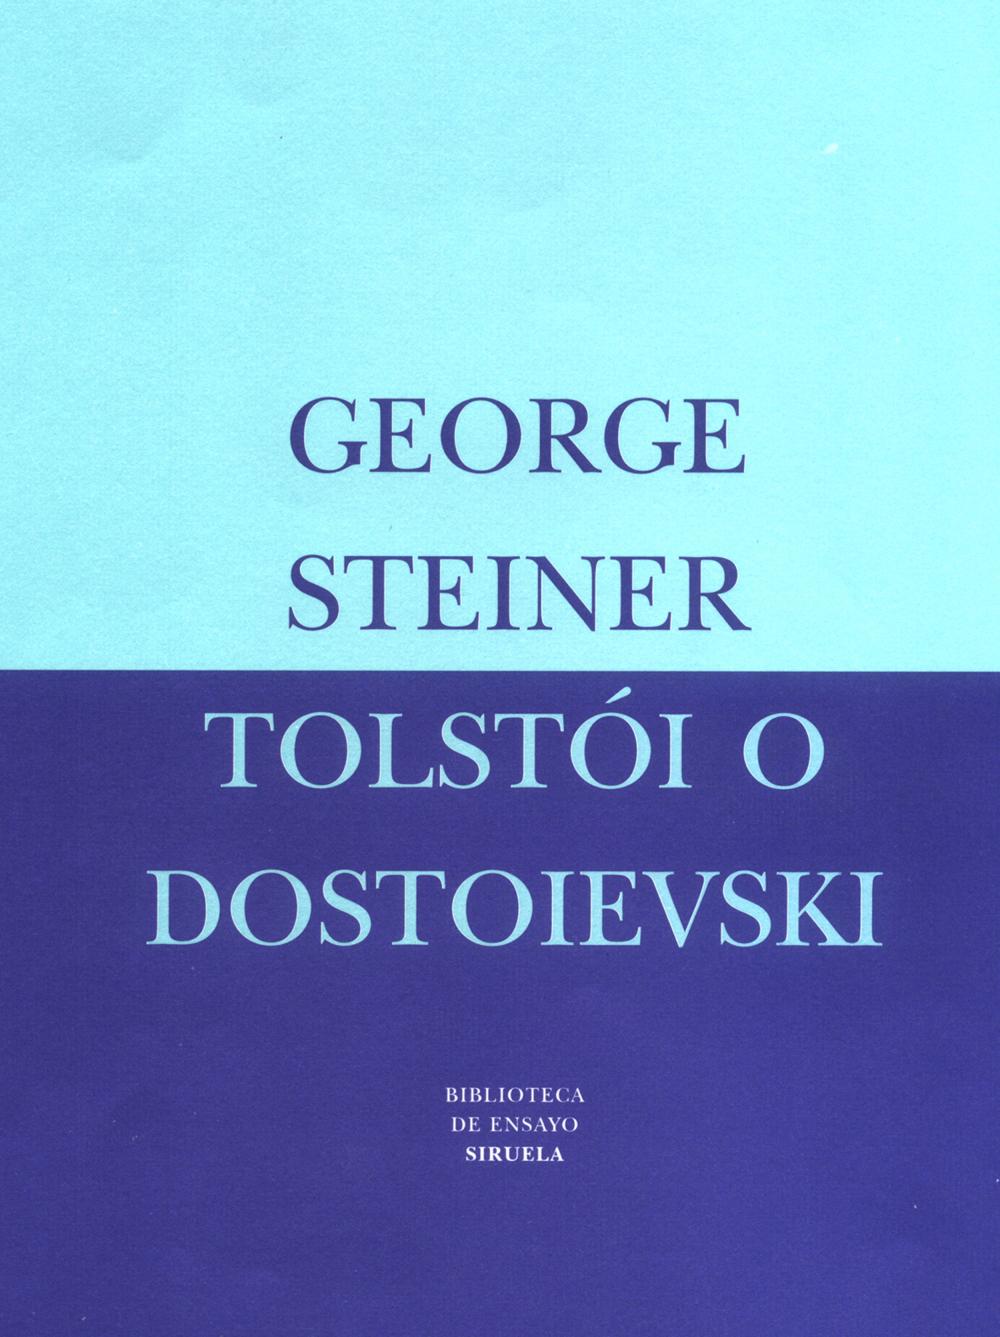 Tolstói o Dostoievski